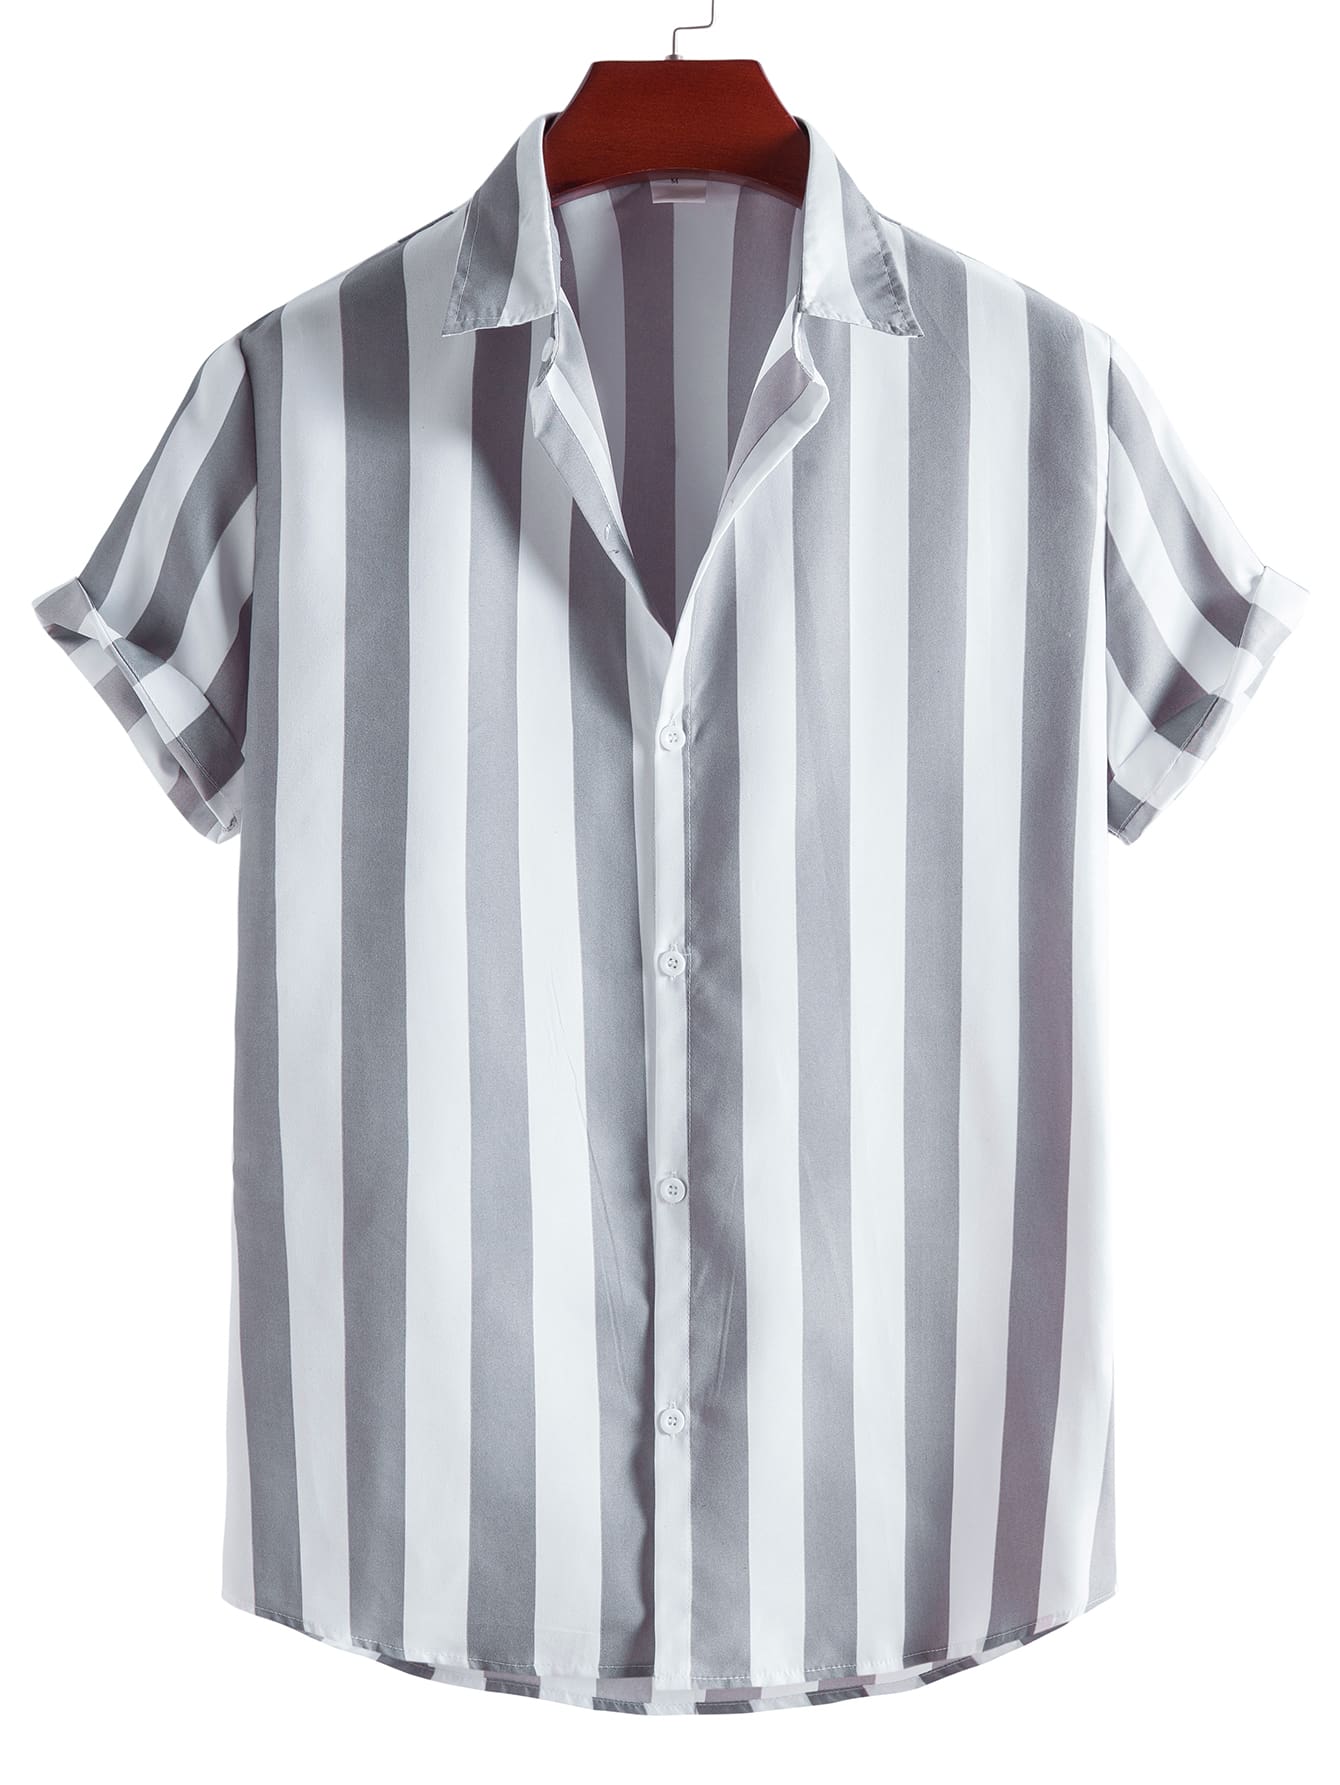 Manfinity Homme Men Vertical Striped Button Up Shirt